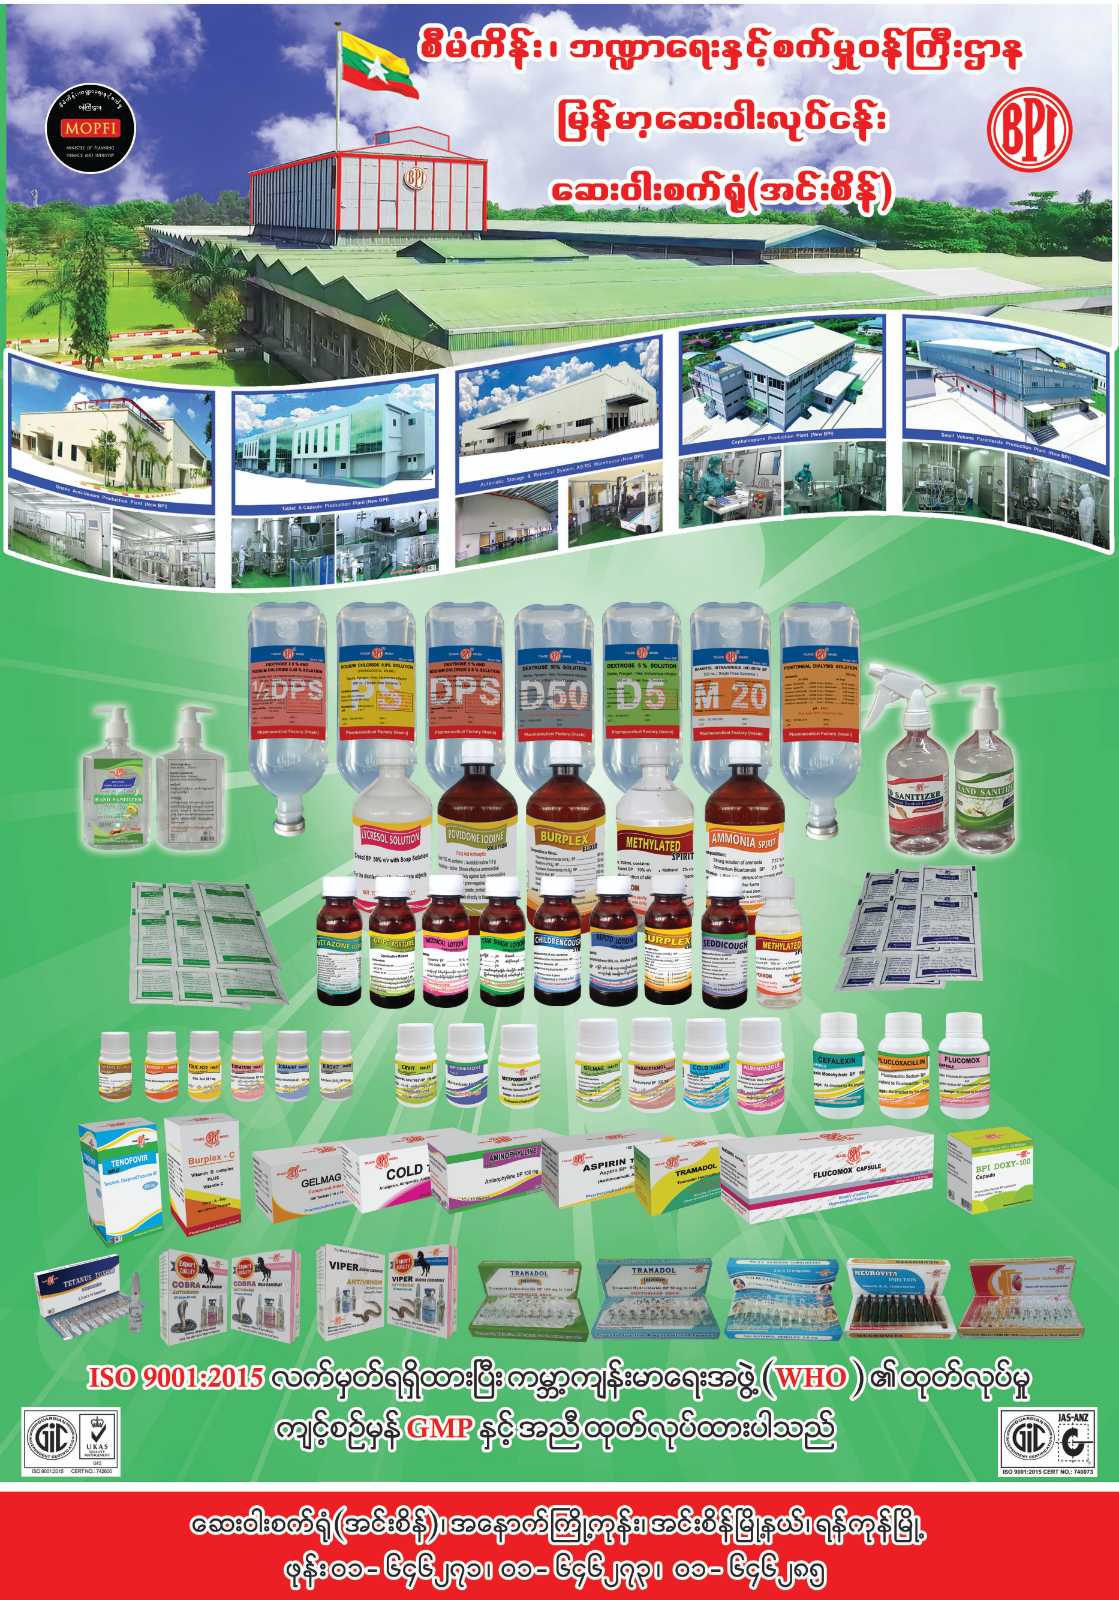 Myanmar Pharmaceutical Factory (Insein)